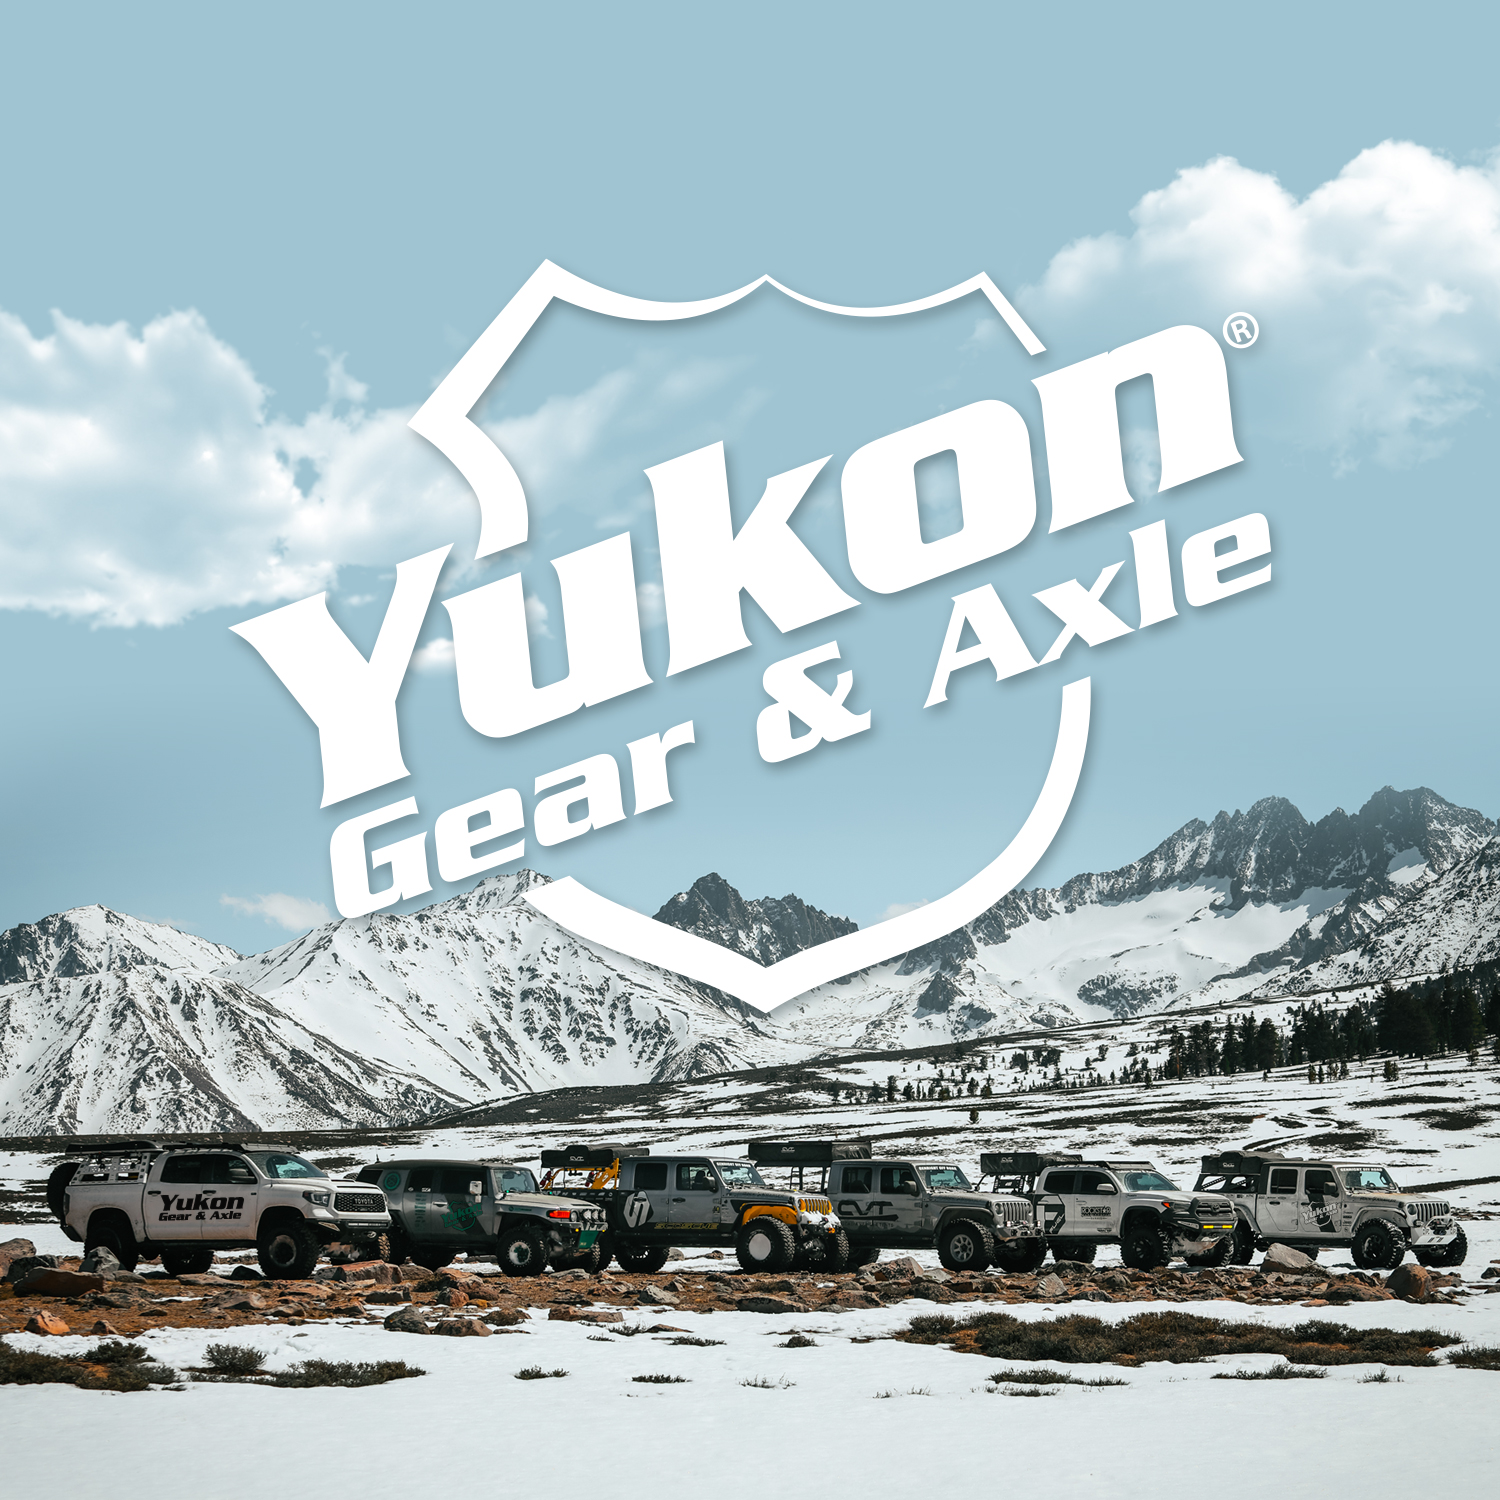 Yukon high performance ring & pinion set, GM & Chrysler 11.5", rear, 3.42 ratio 